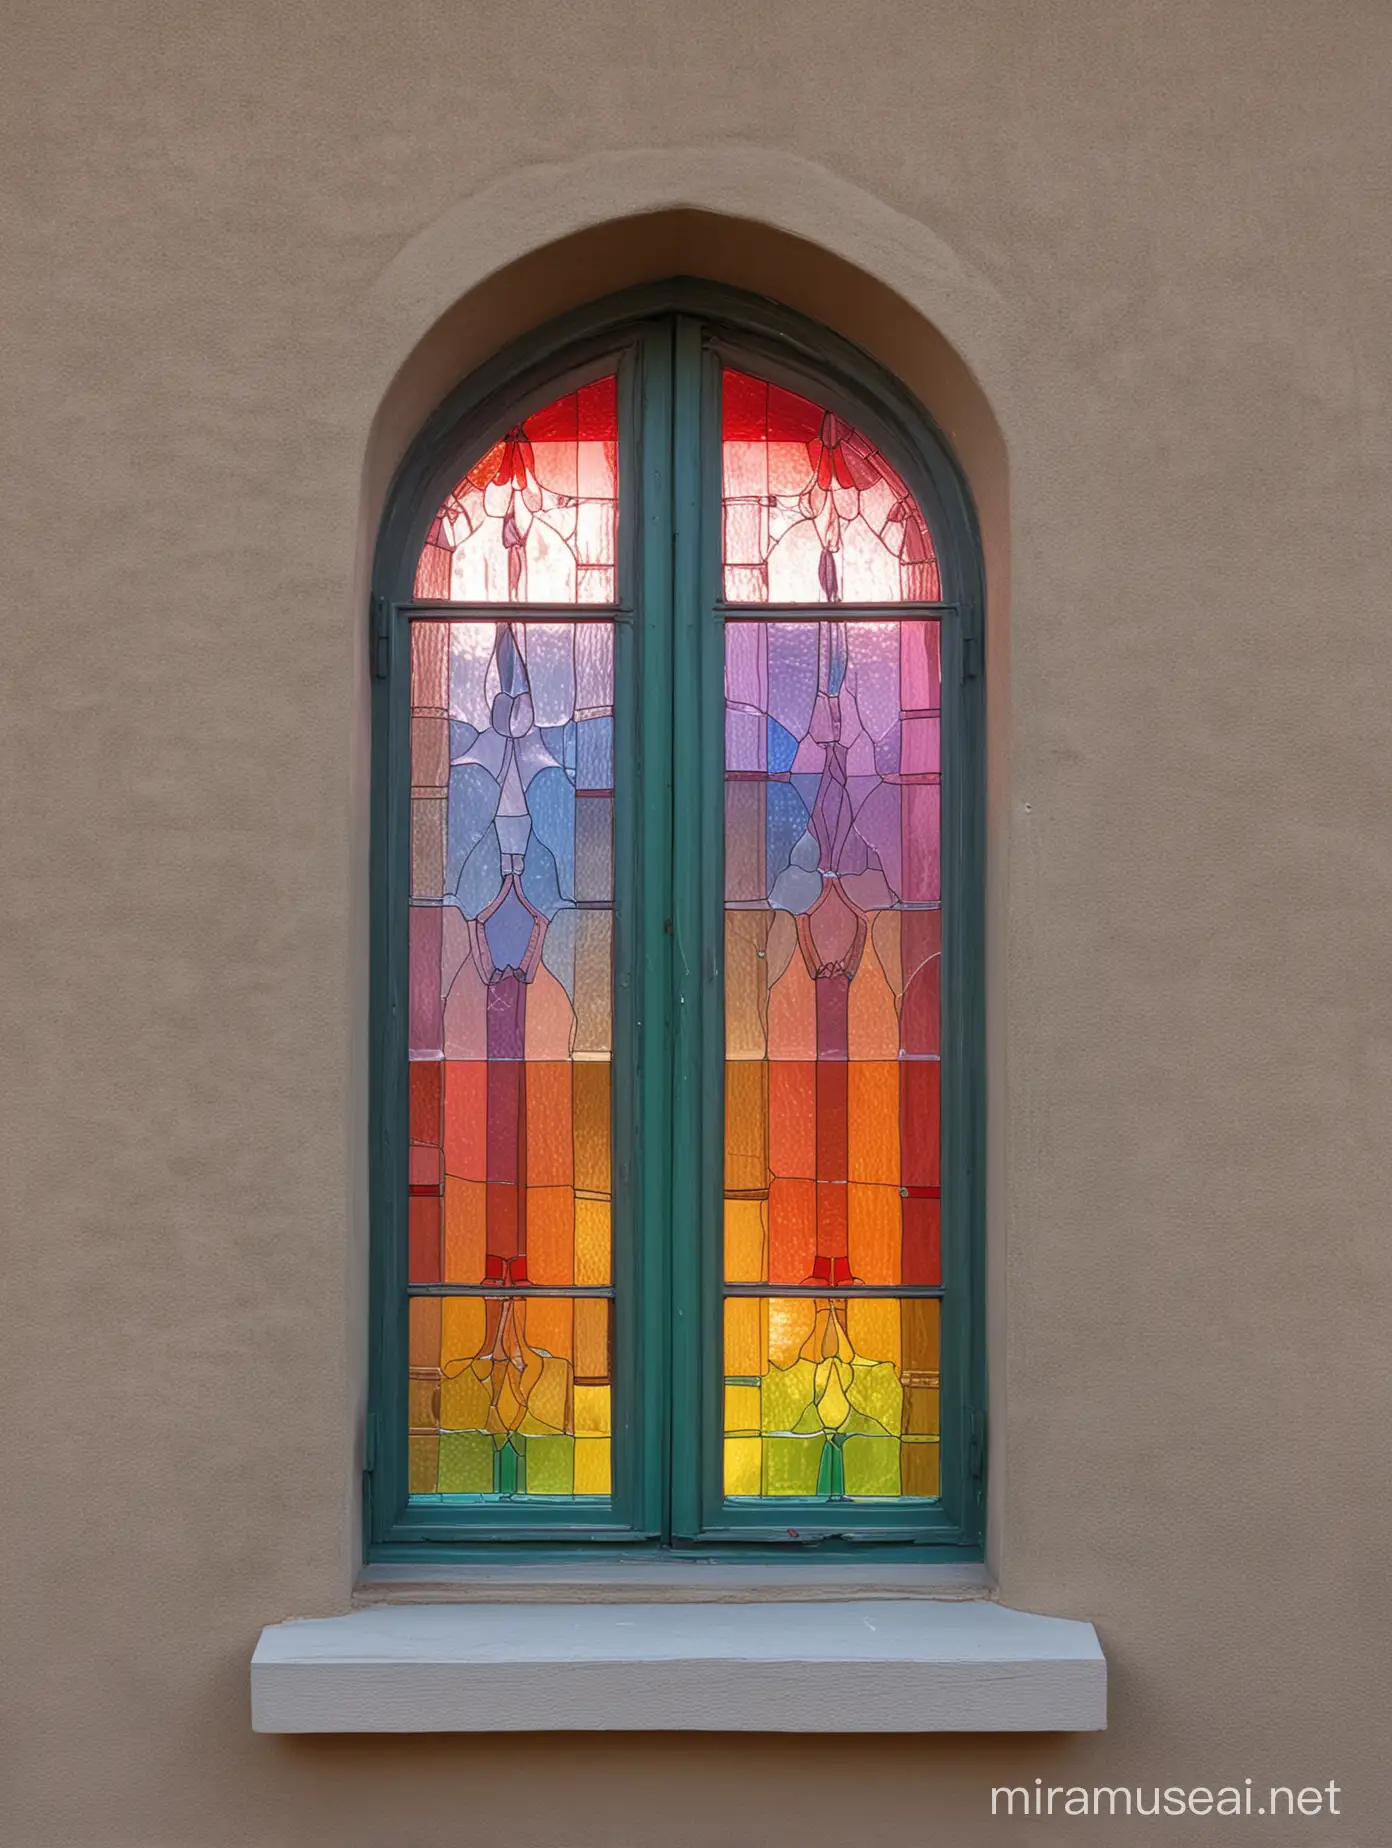 Rainbow Gradient Stained Glass Windows Colorful Light Illuminates Leaded Glass